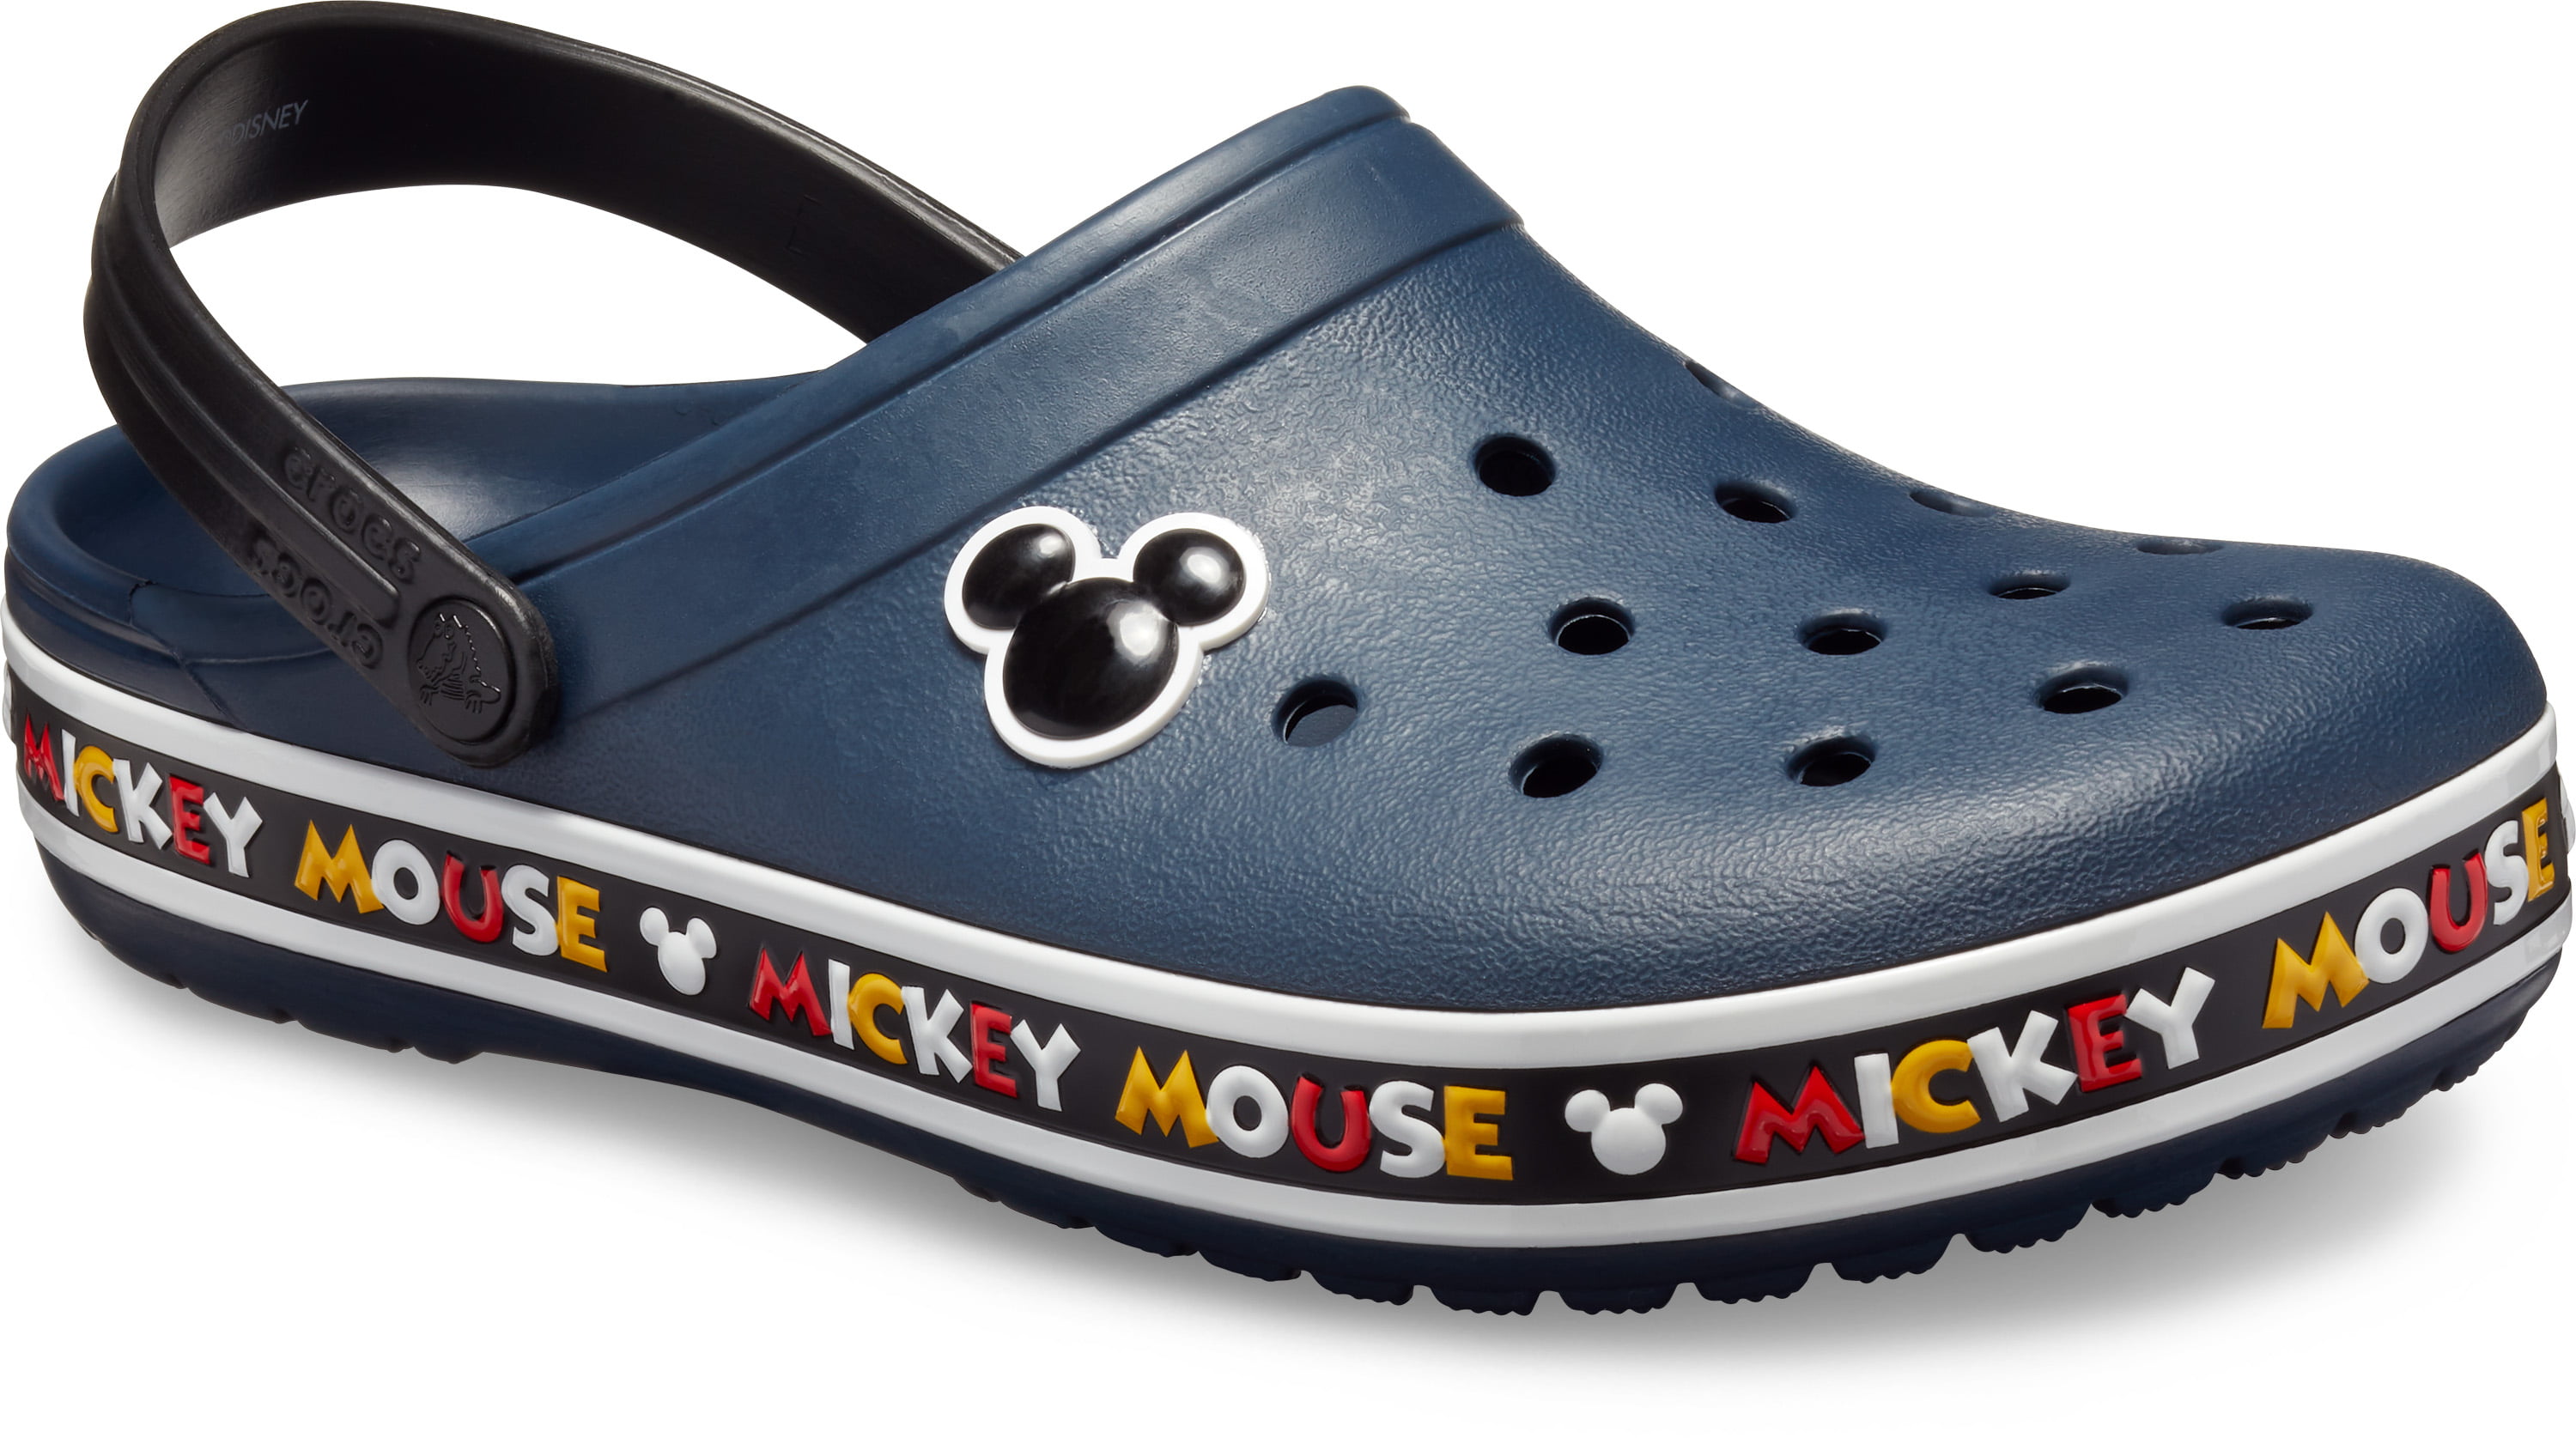 crocs mickey